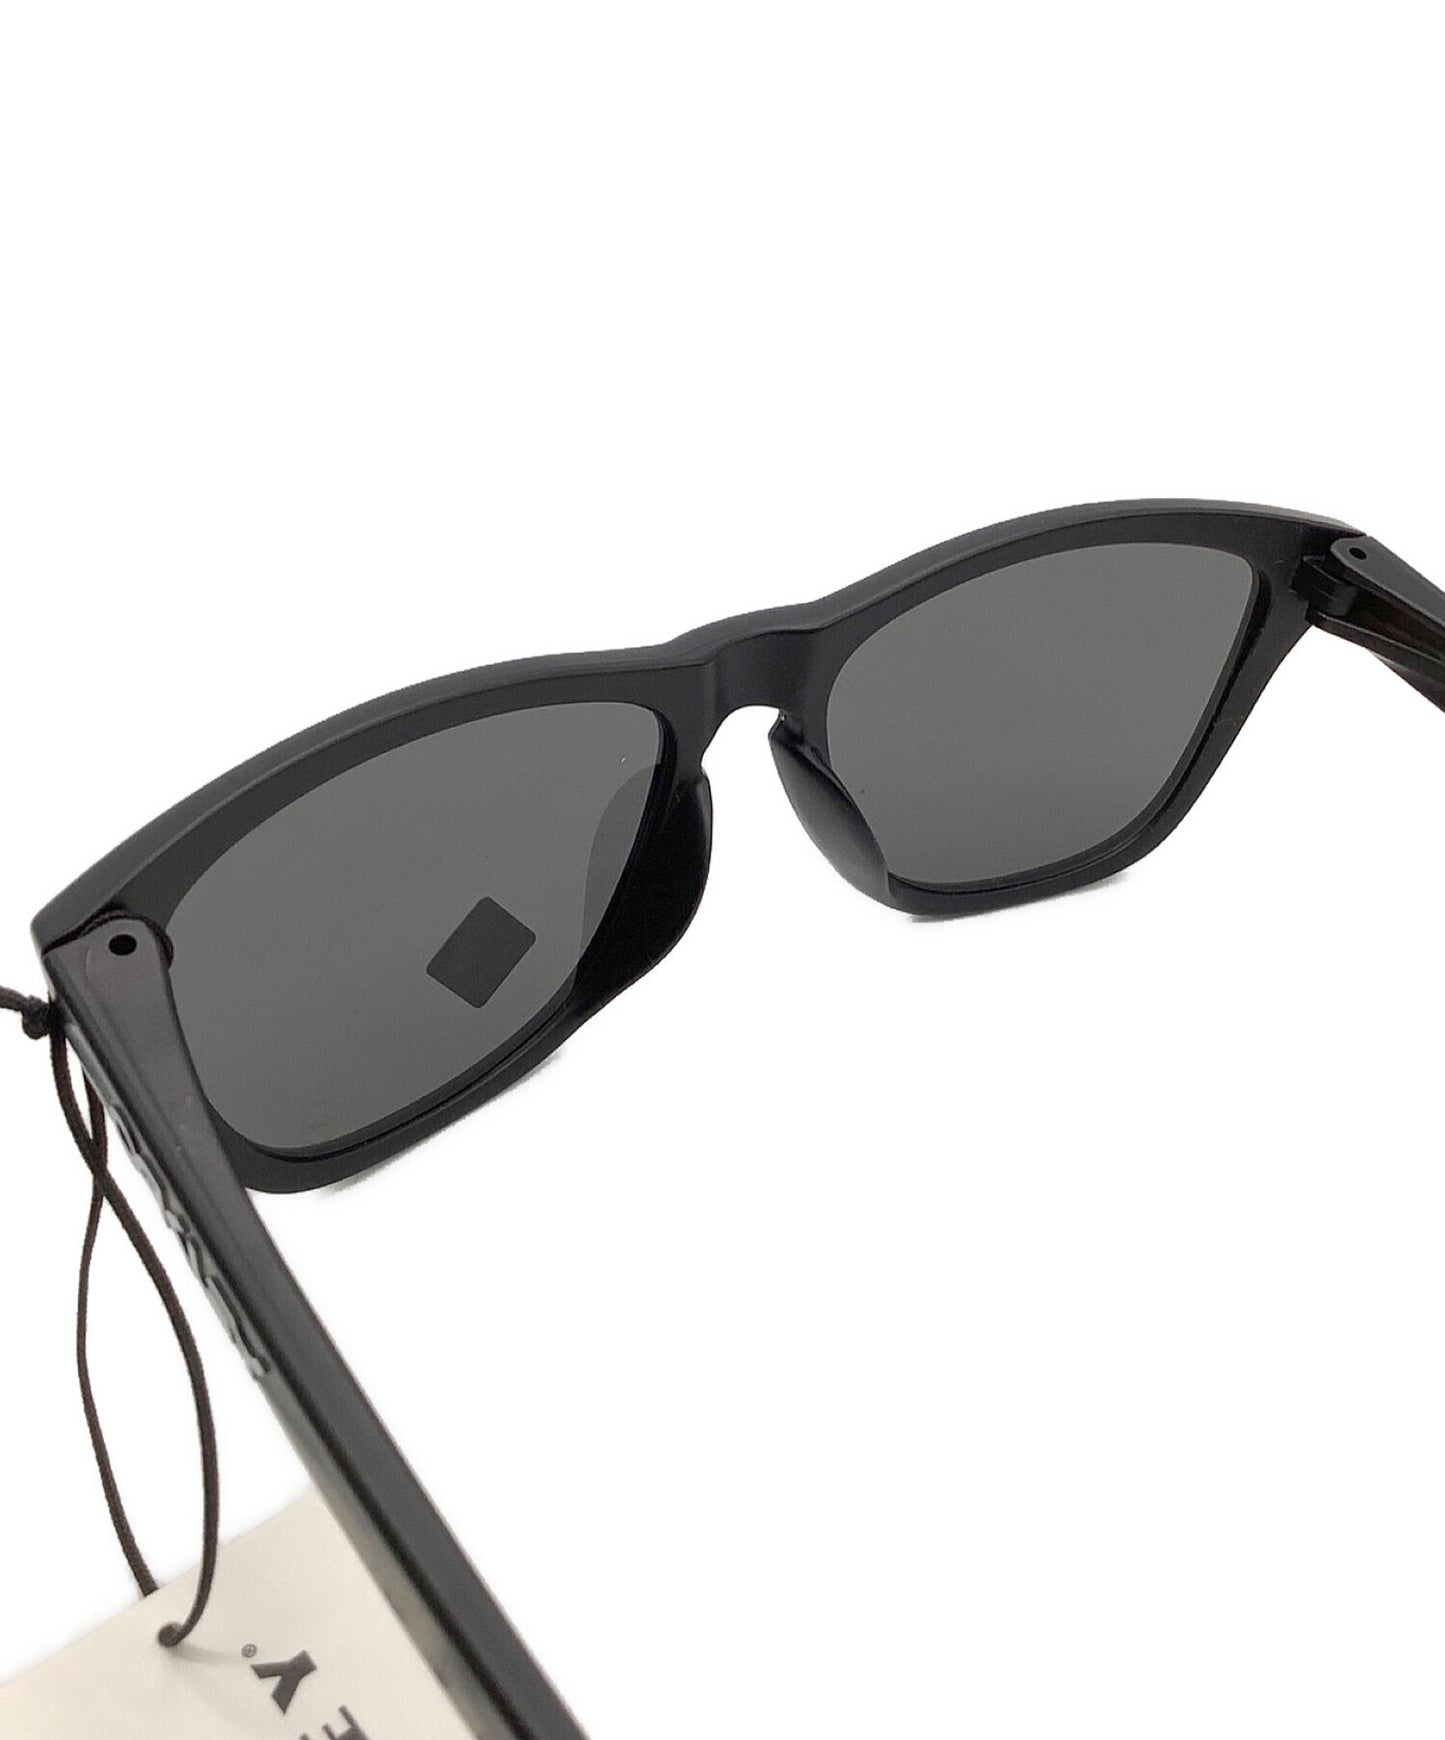 OAKLEY x fragment design sunglasses 0OO6044